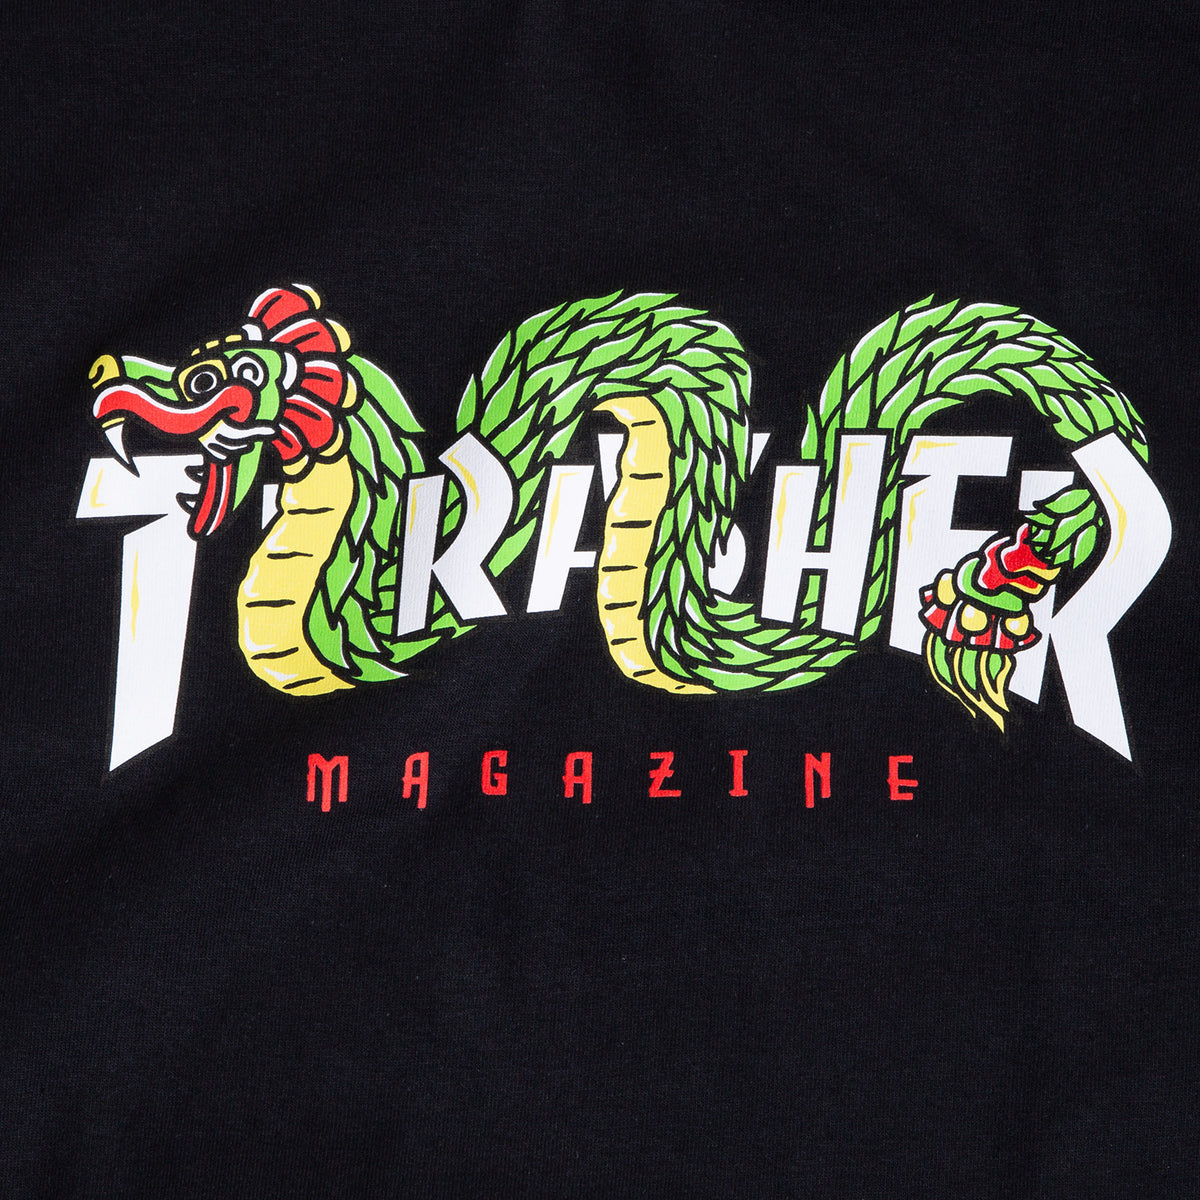 Thrasher Aztec T-Shirt